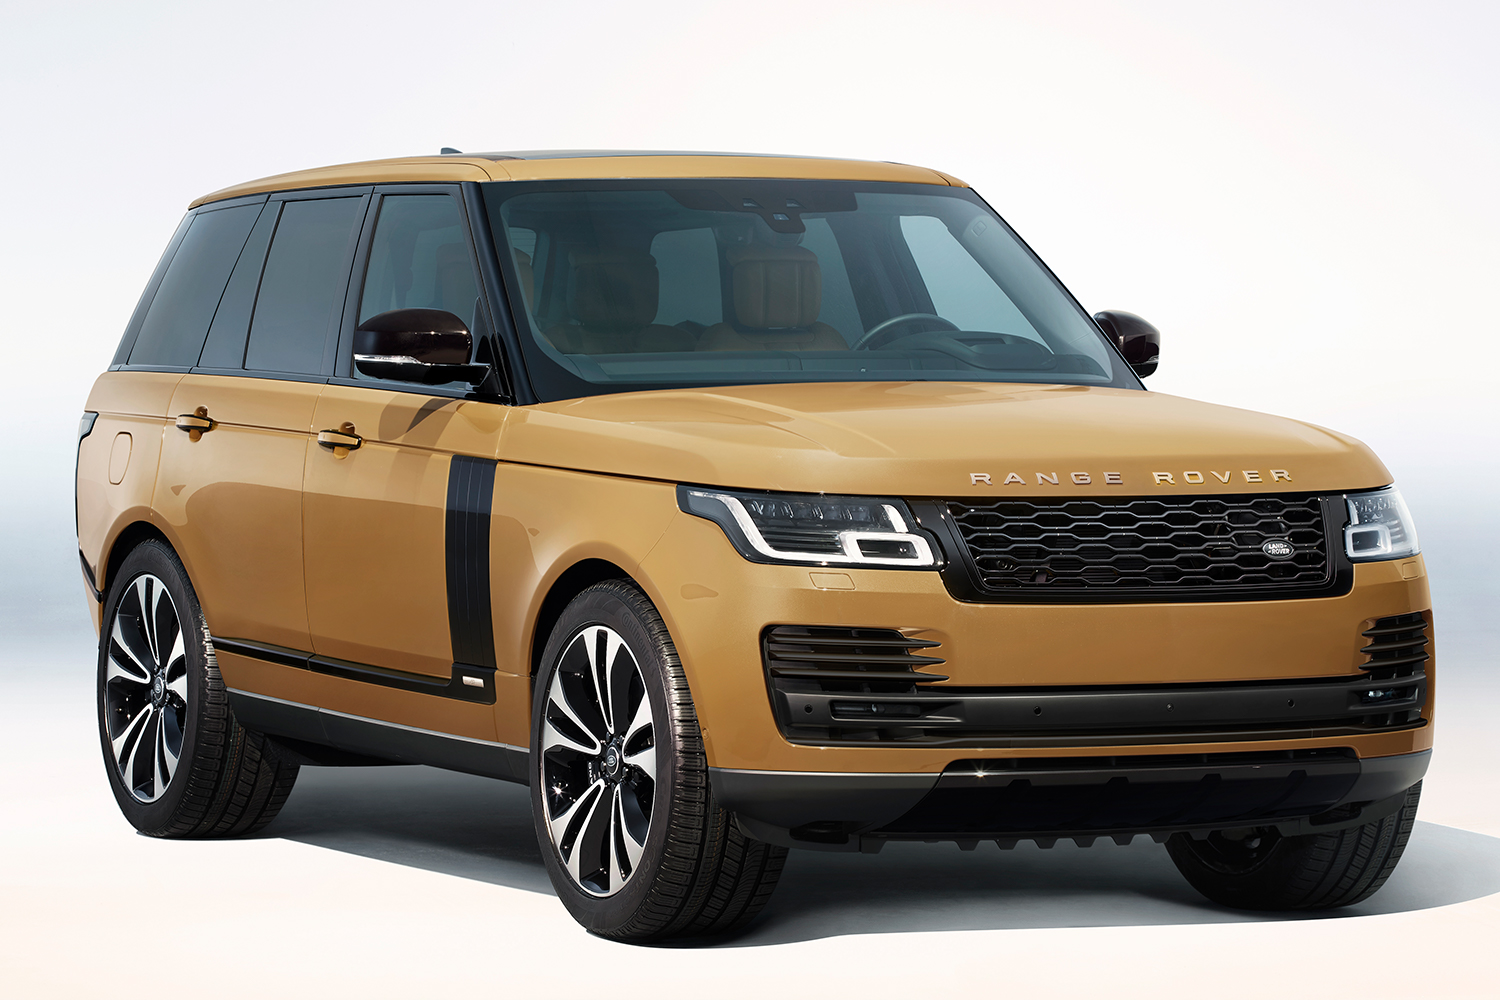 Land Rover Unveils Range Rover Fifty LimitedEdition SUV InsideHook